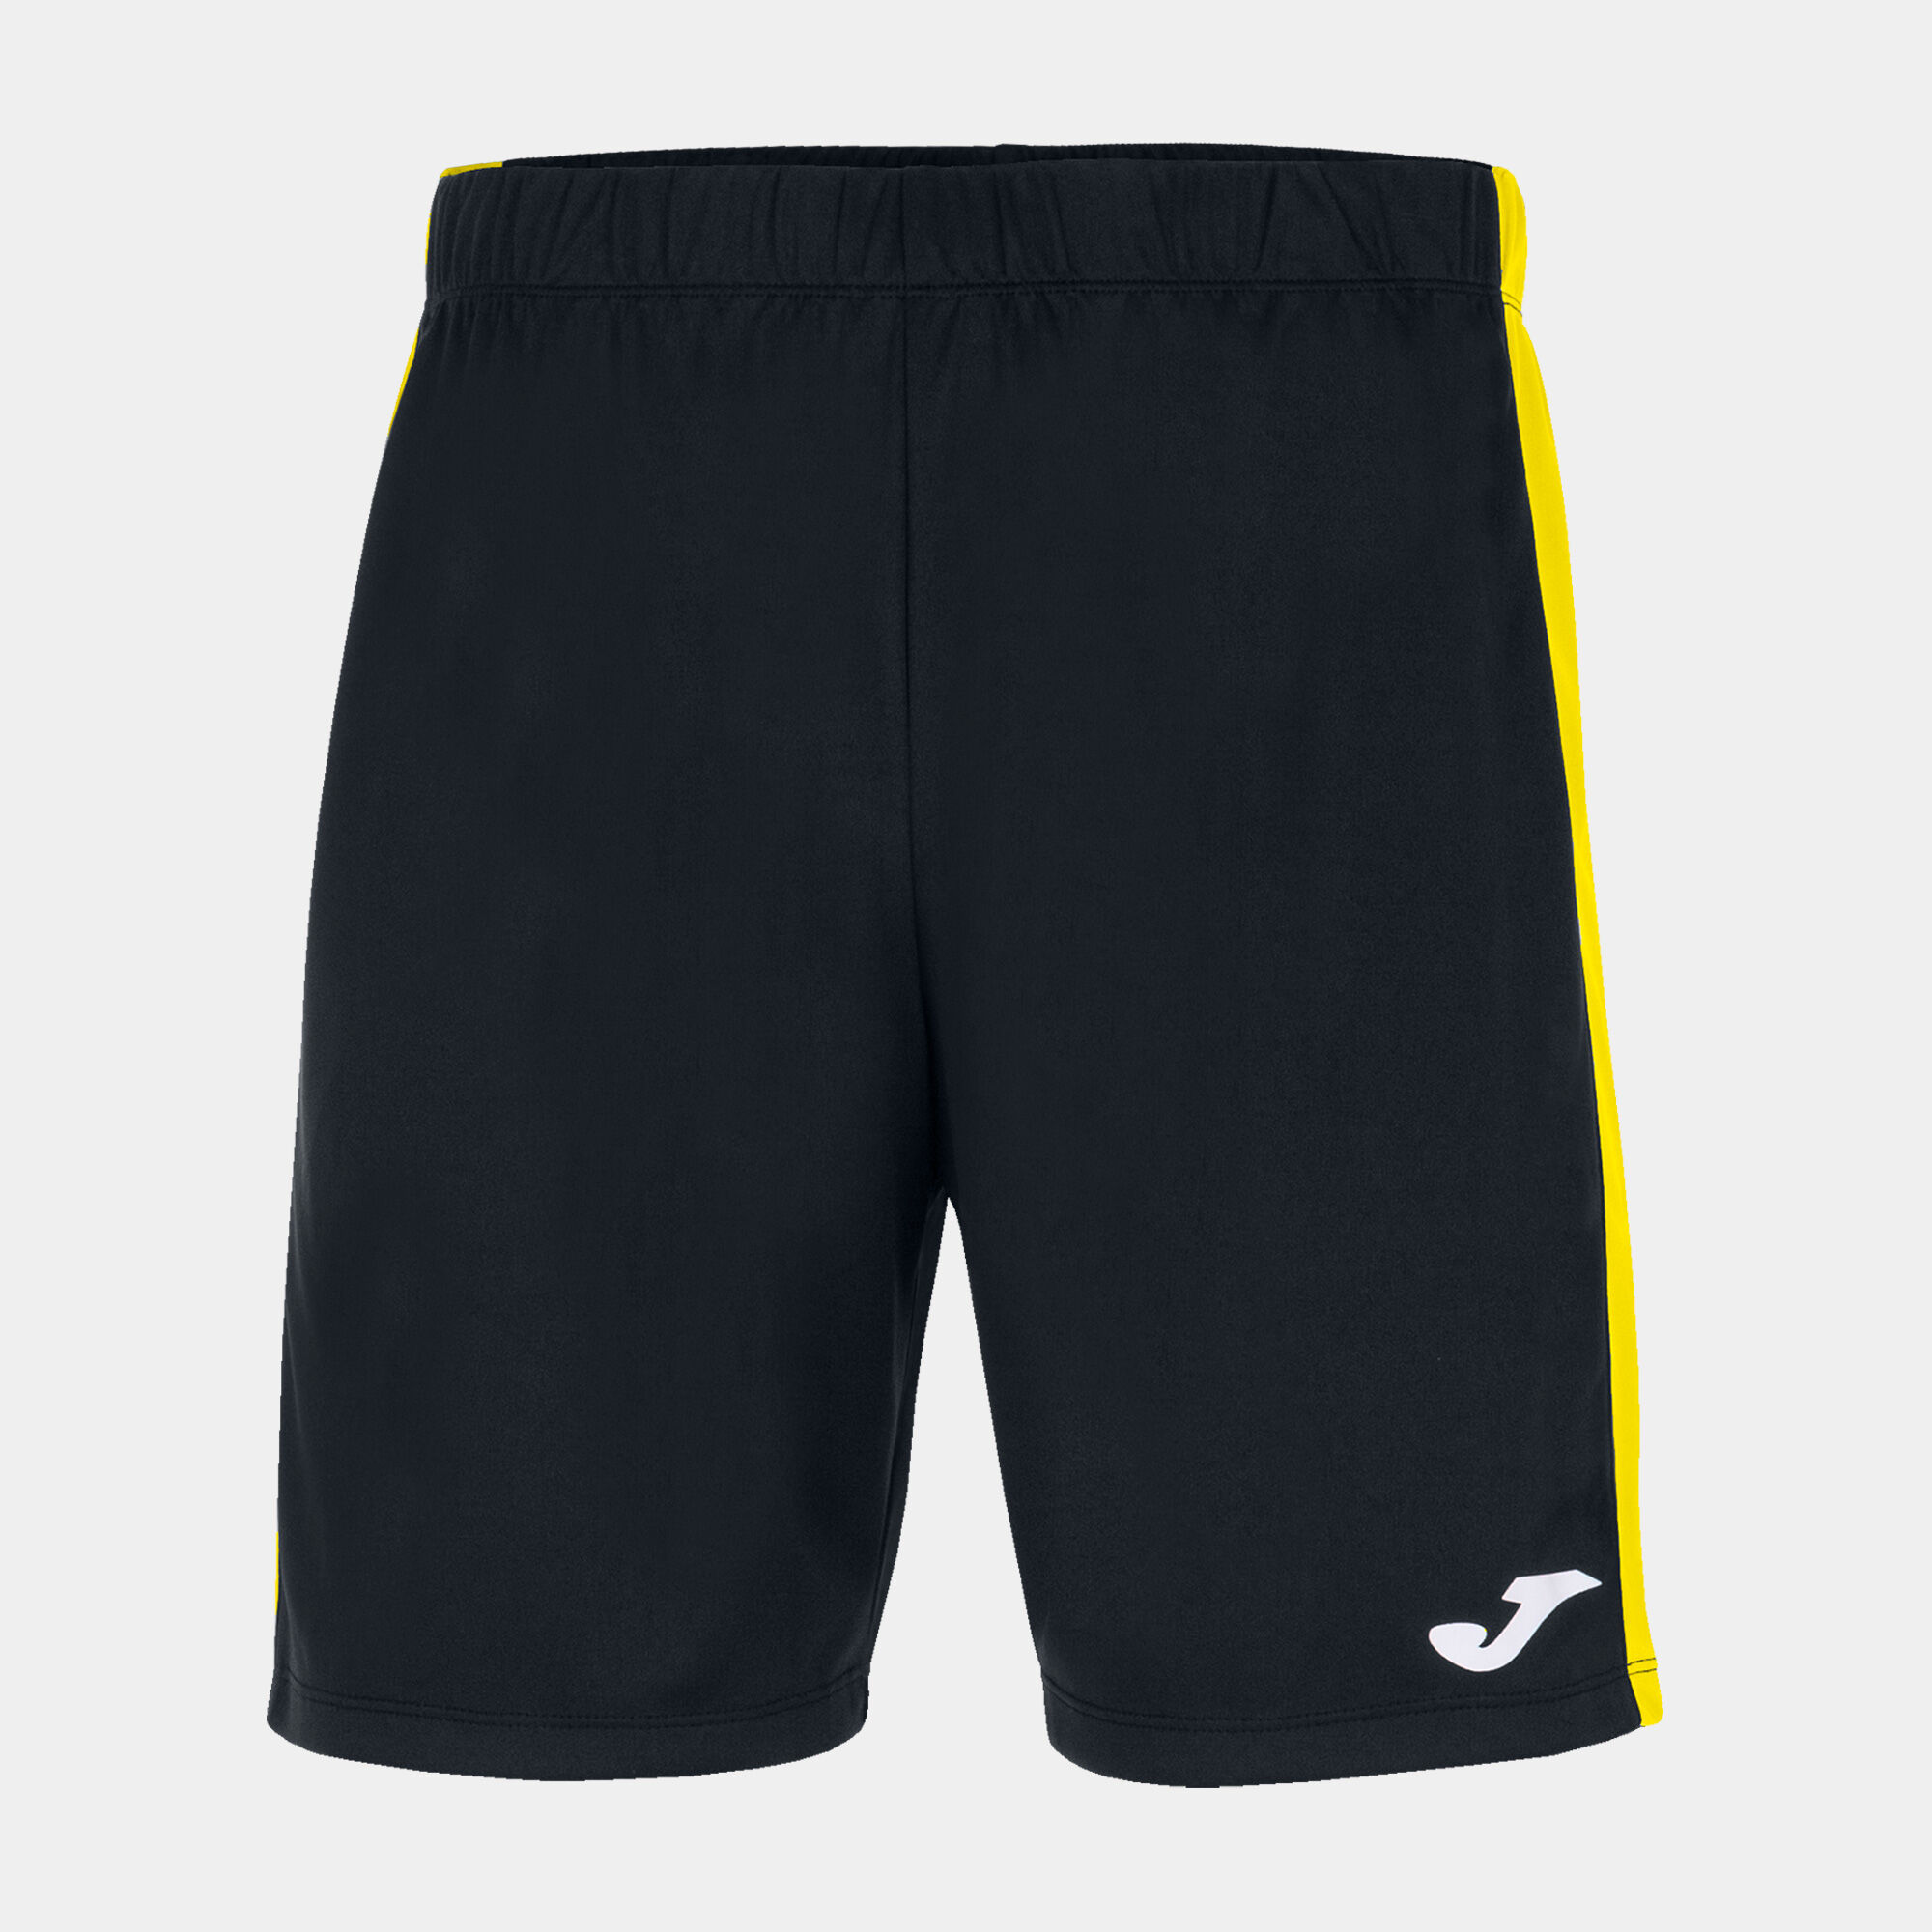 Shorts man Maxi black yellow